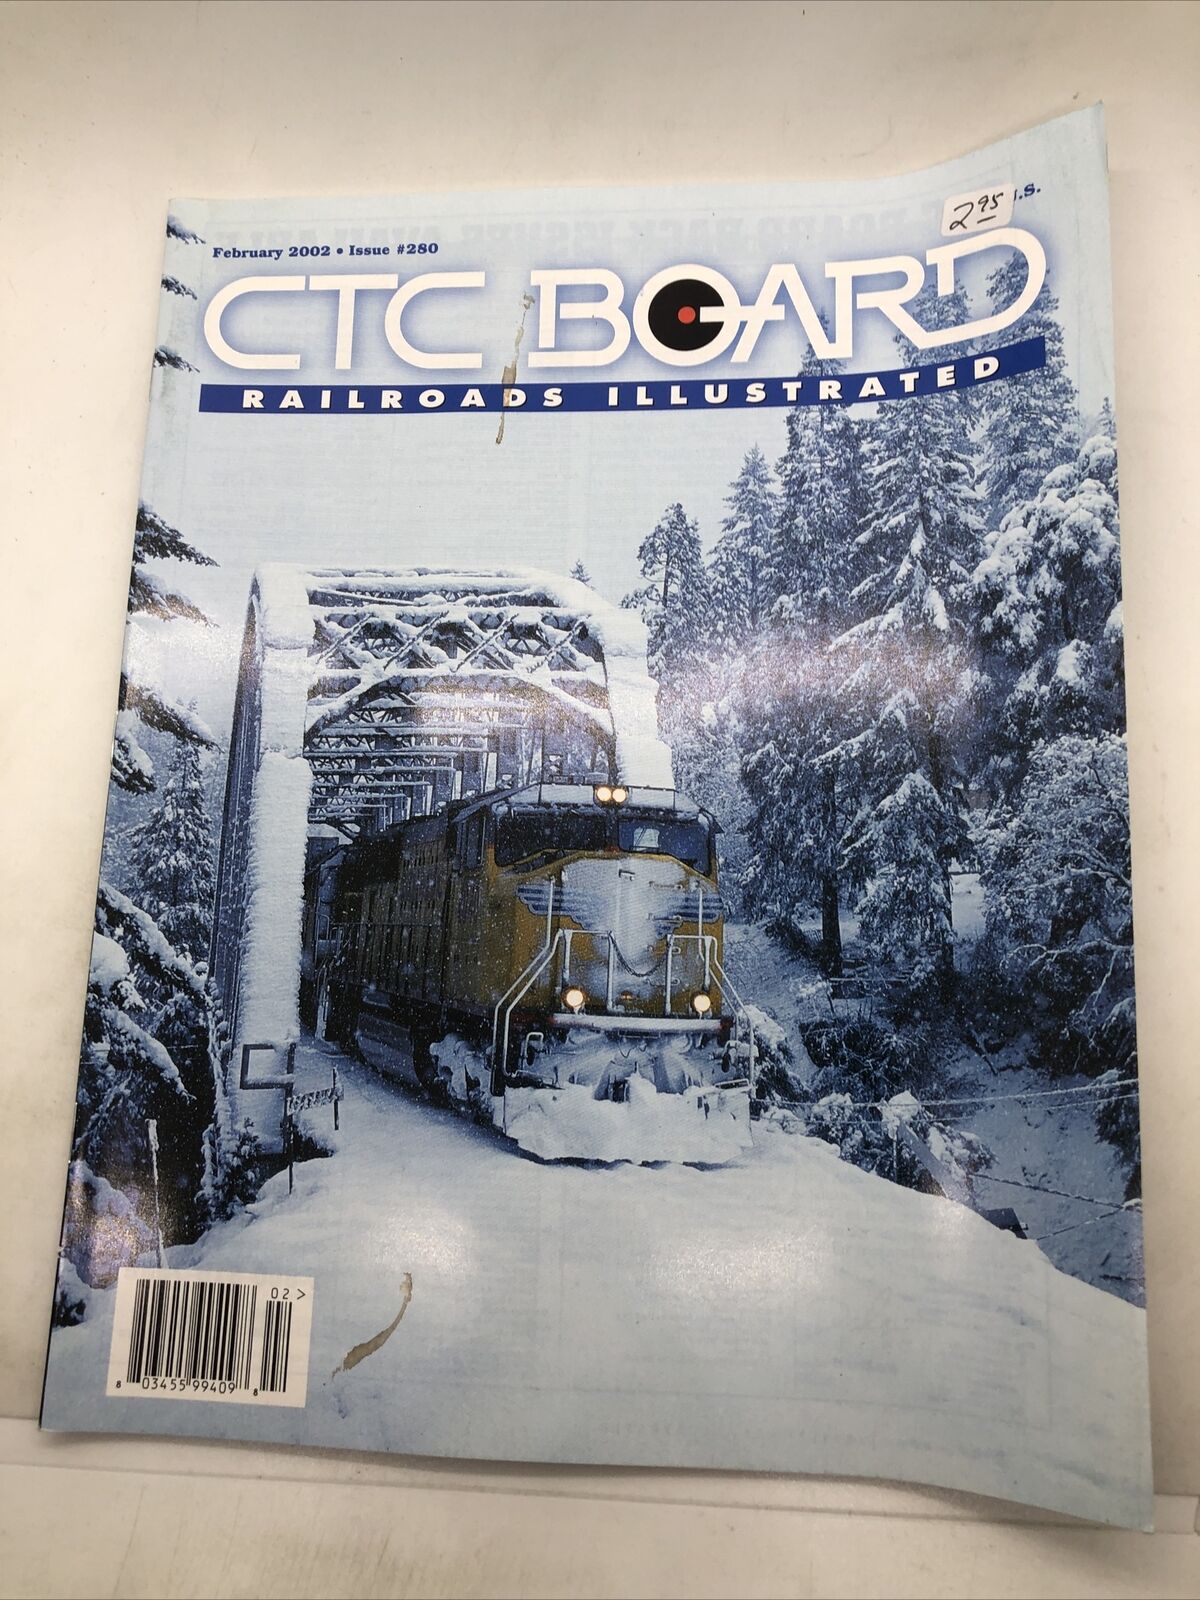 CTC Board Railroad Illustrated - February 2002